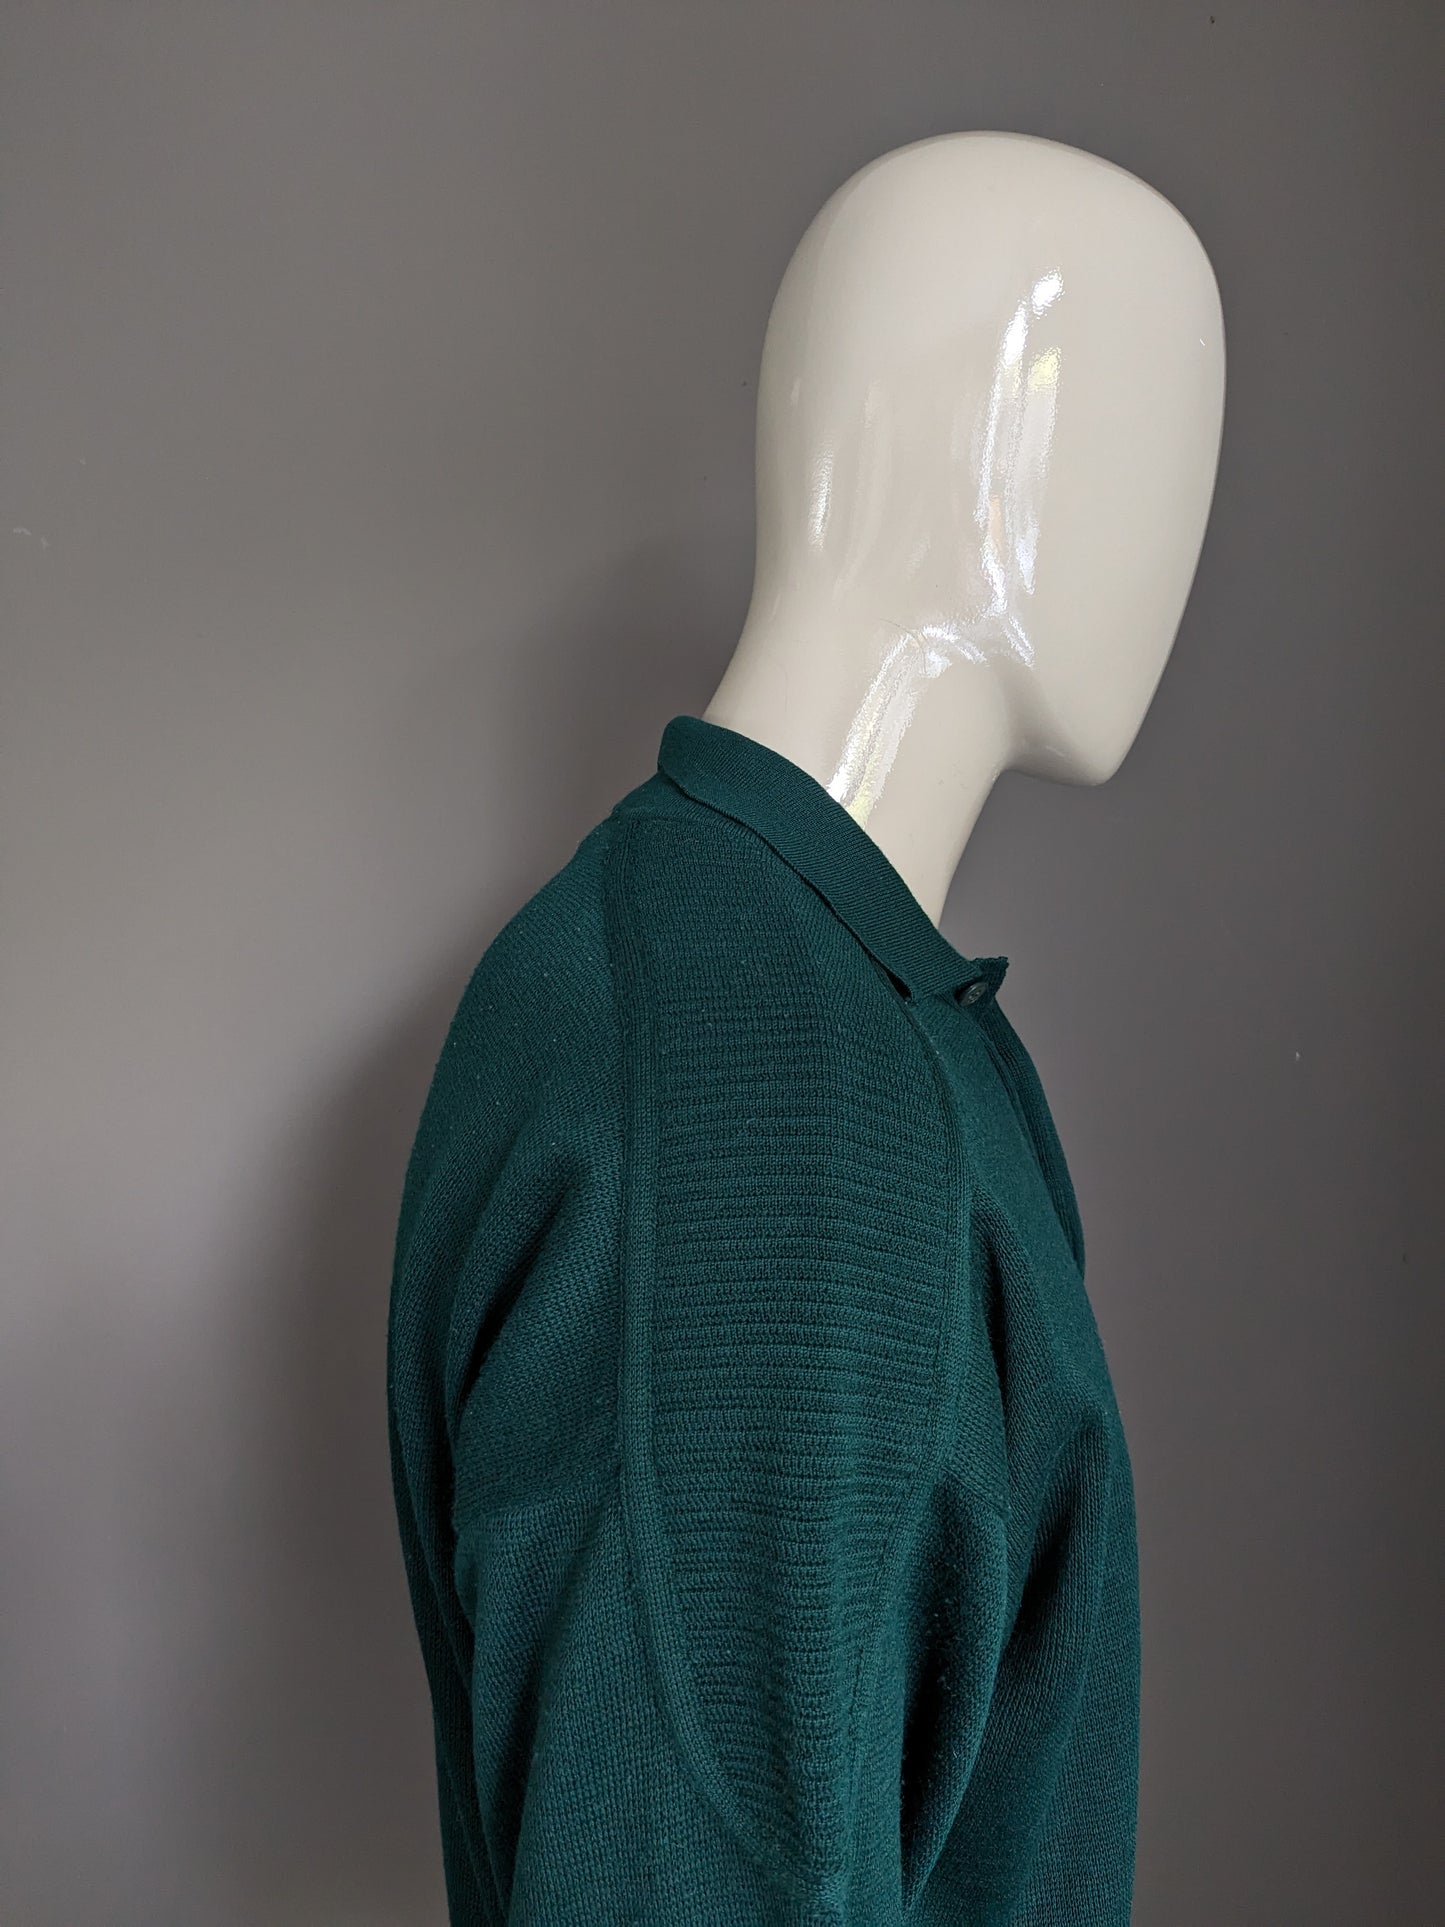 Vintage woolen George Bernard Polo sweater. Dark green colored. Size L.